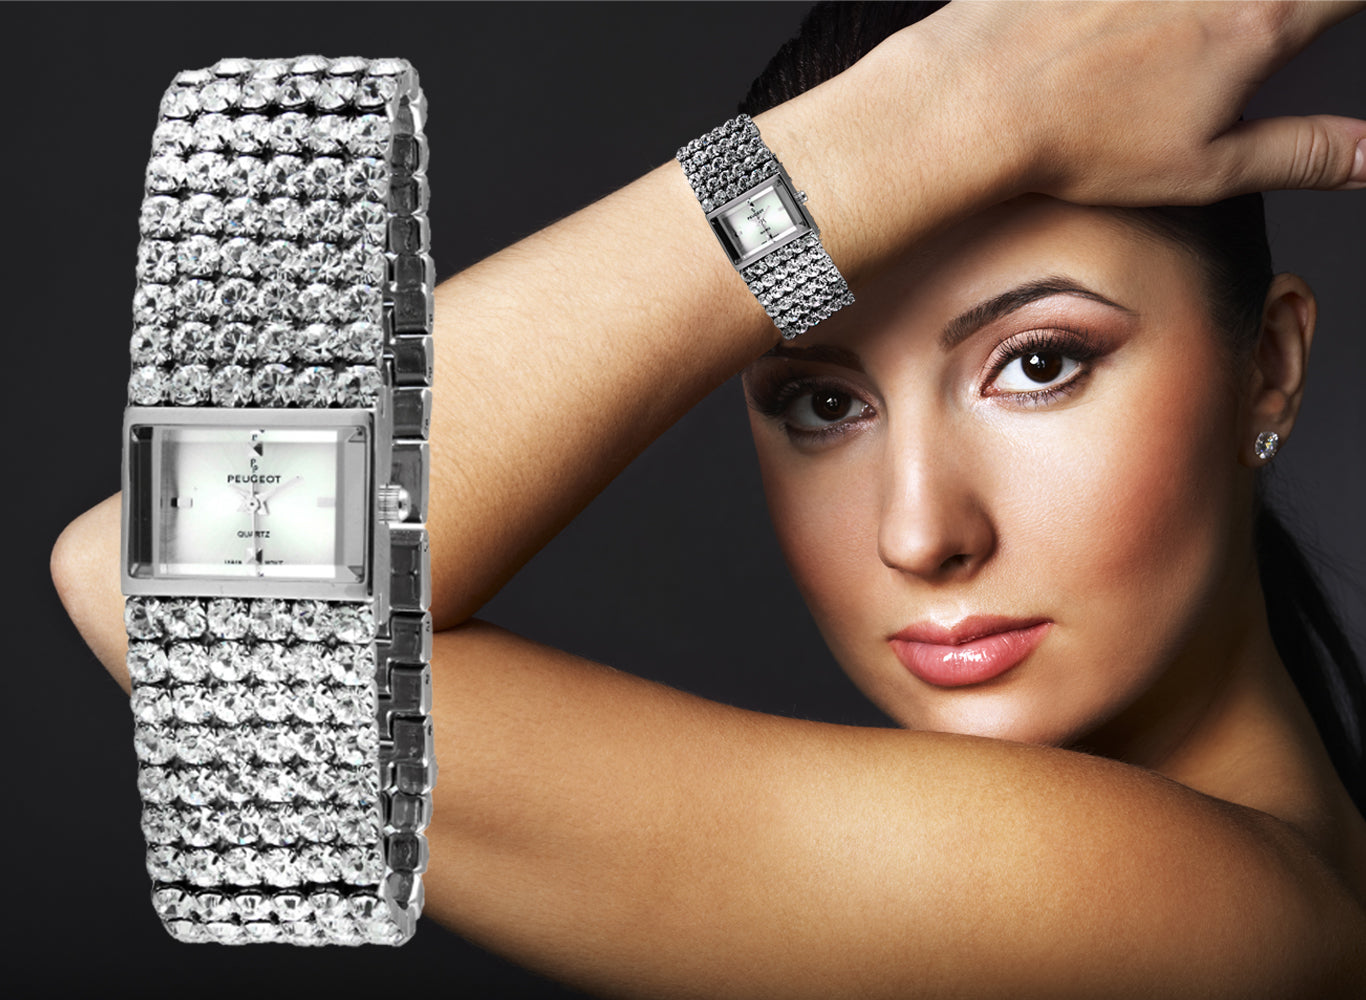 Women's Jeweled Evening Watch 6 Strands of Genuine Swarovski Crystals -  Peugeot Watches